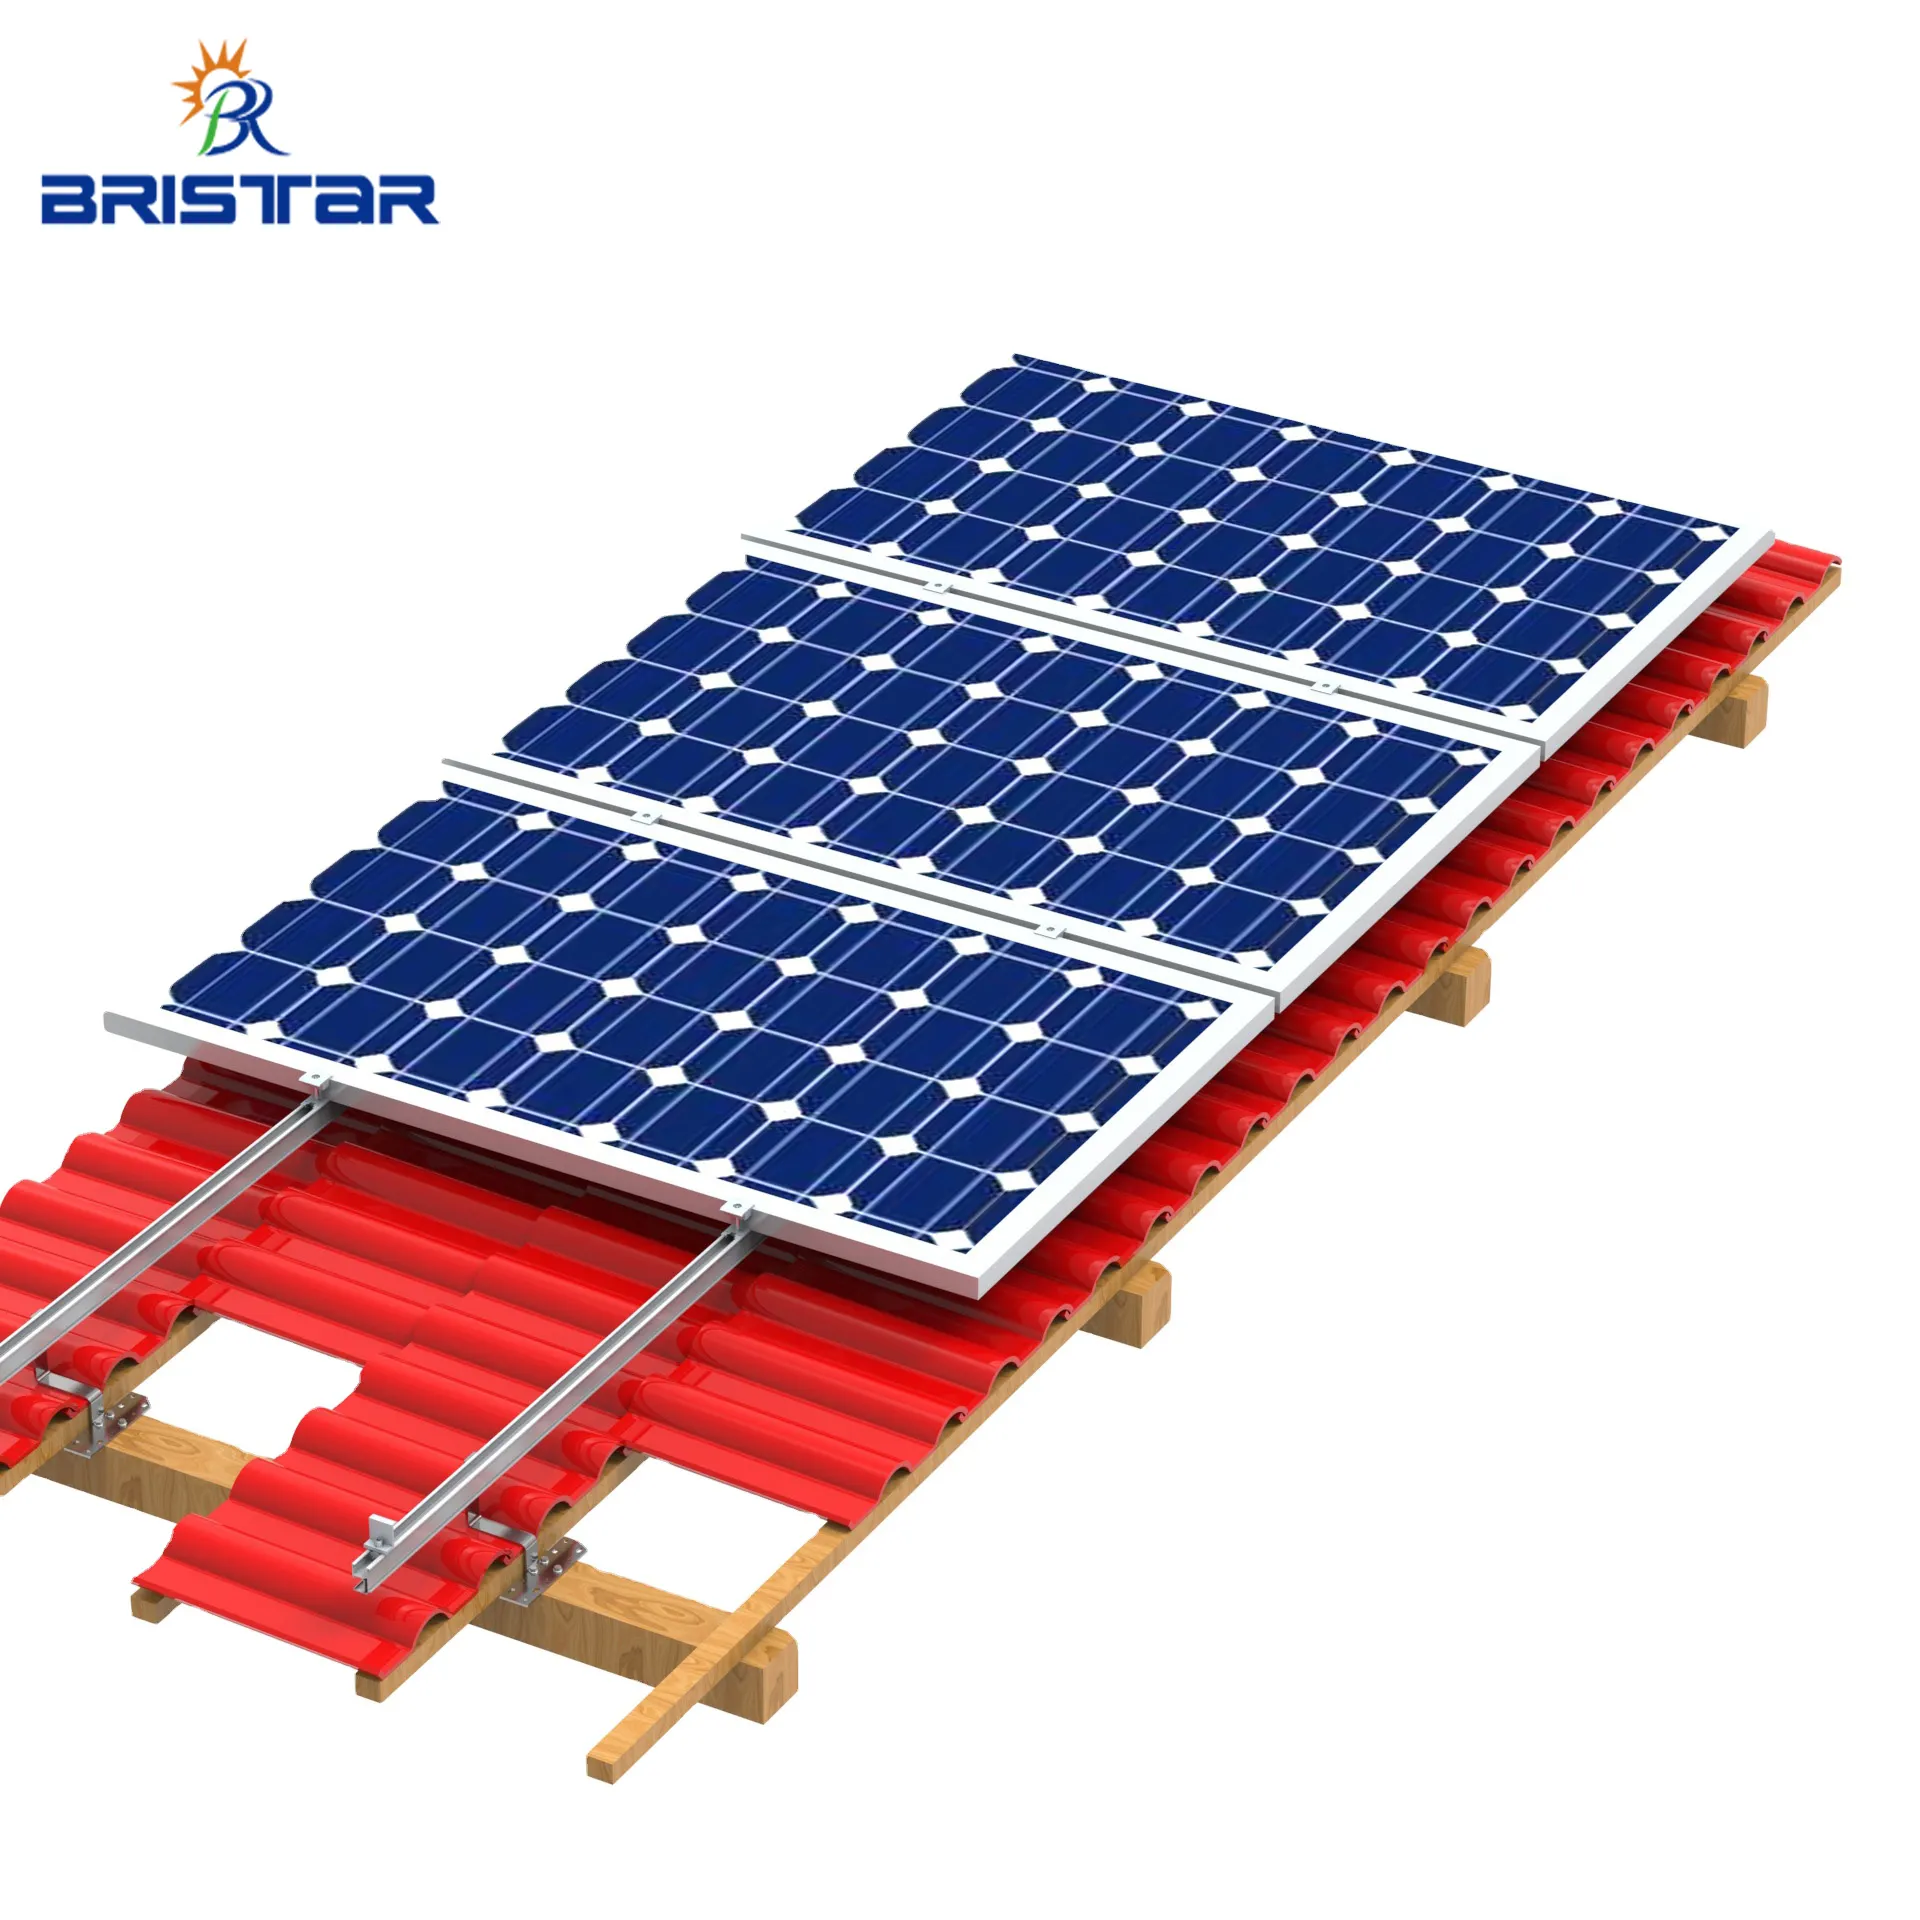 Bristar solar roof hook install kit mount panel roof solar fotovoltaico PV rail rack system